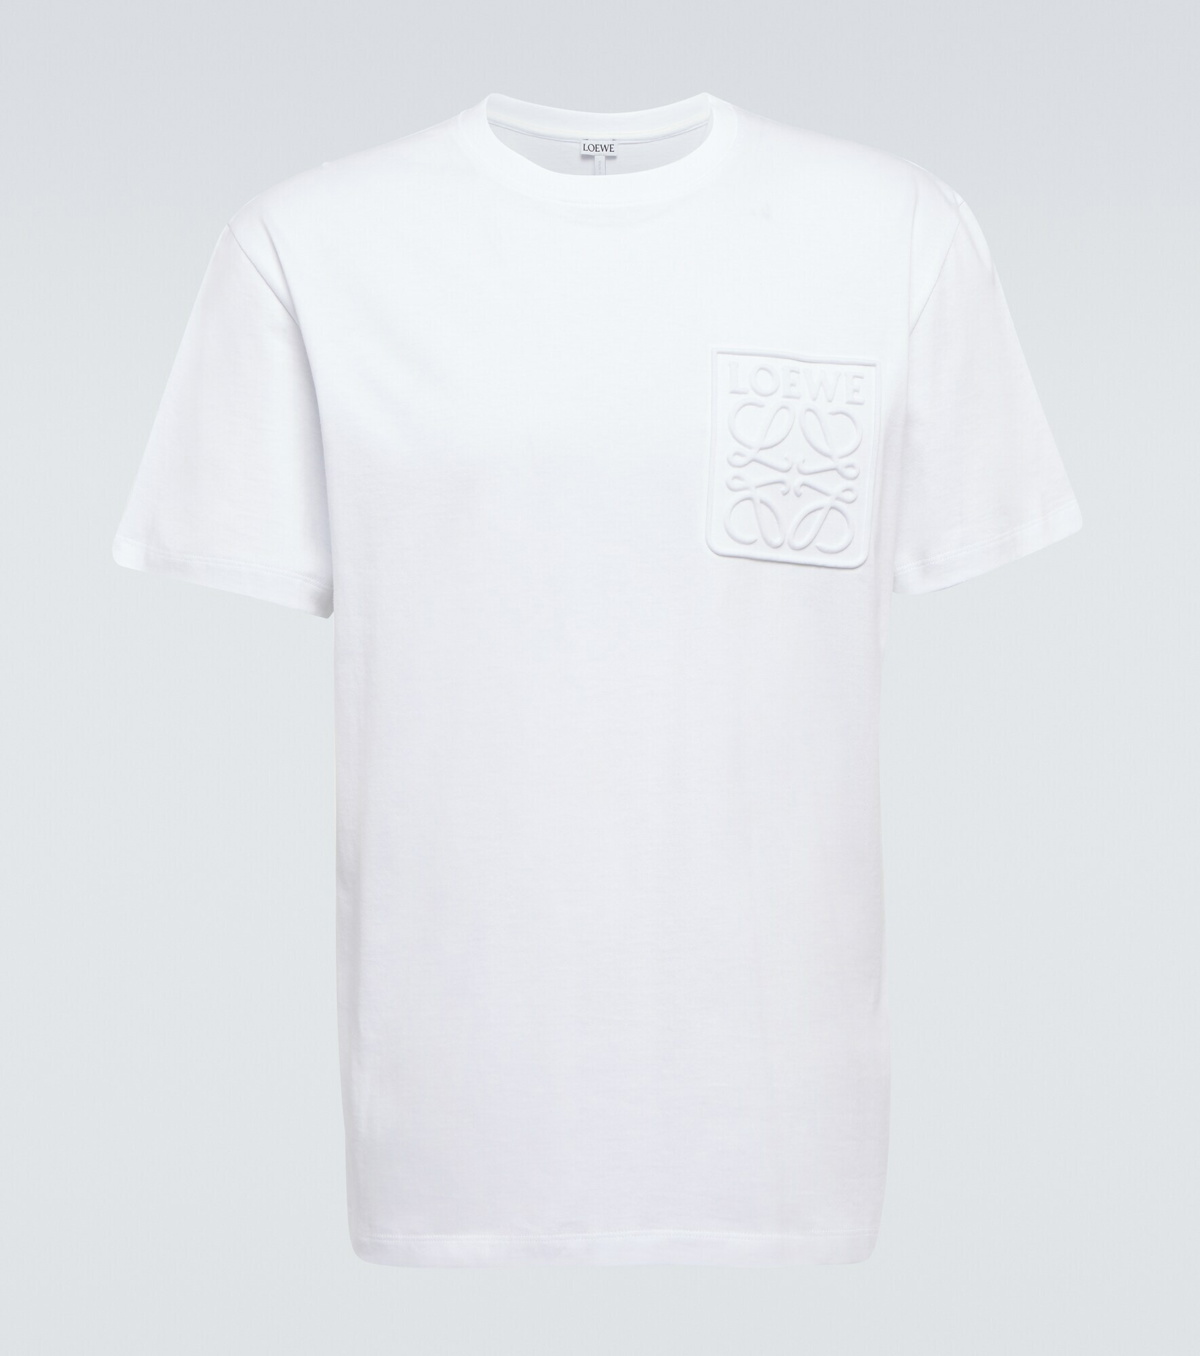 Loewe Anagram Graphic-print Cotton-jersey T-shirt In White Green